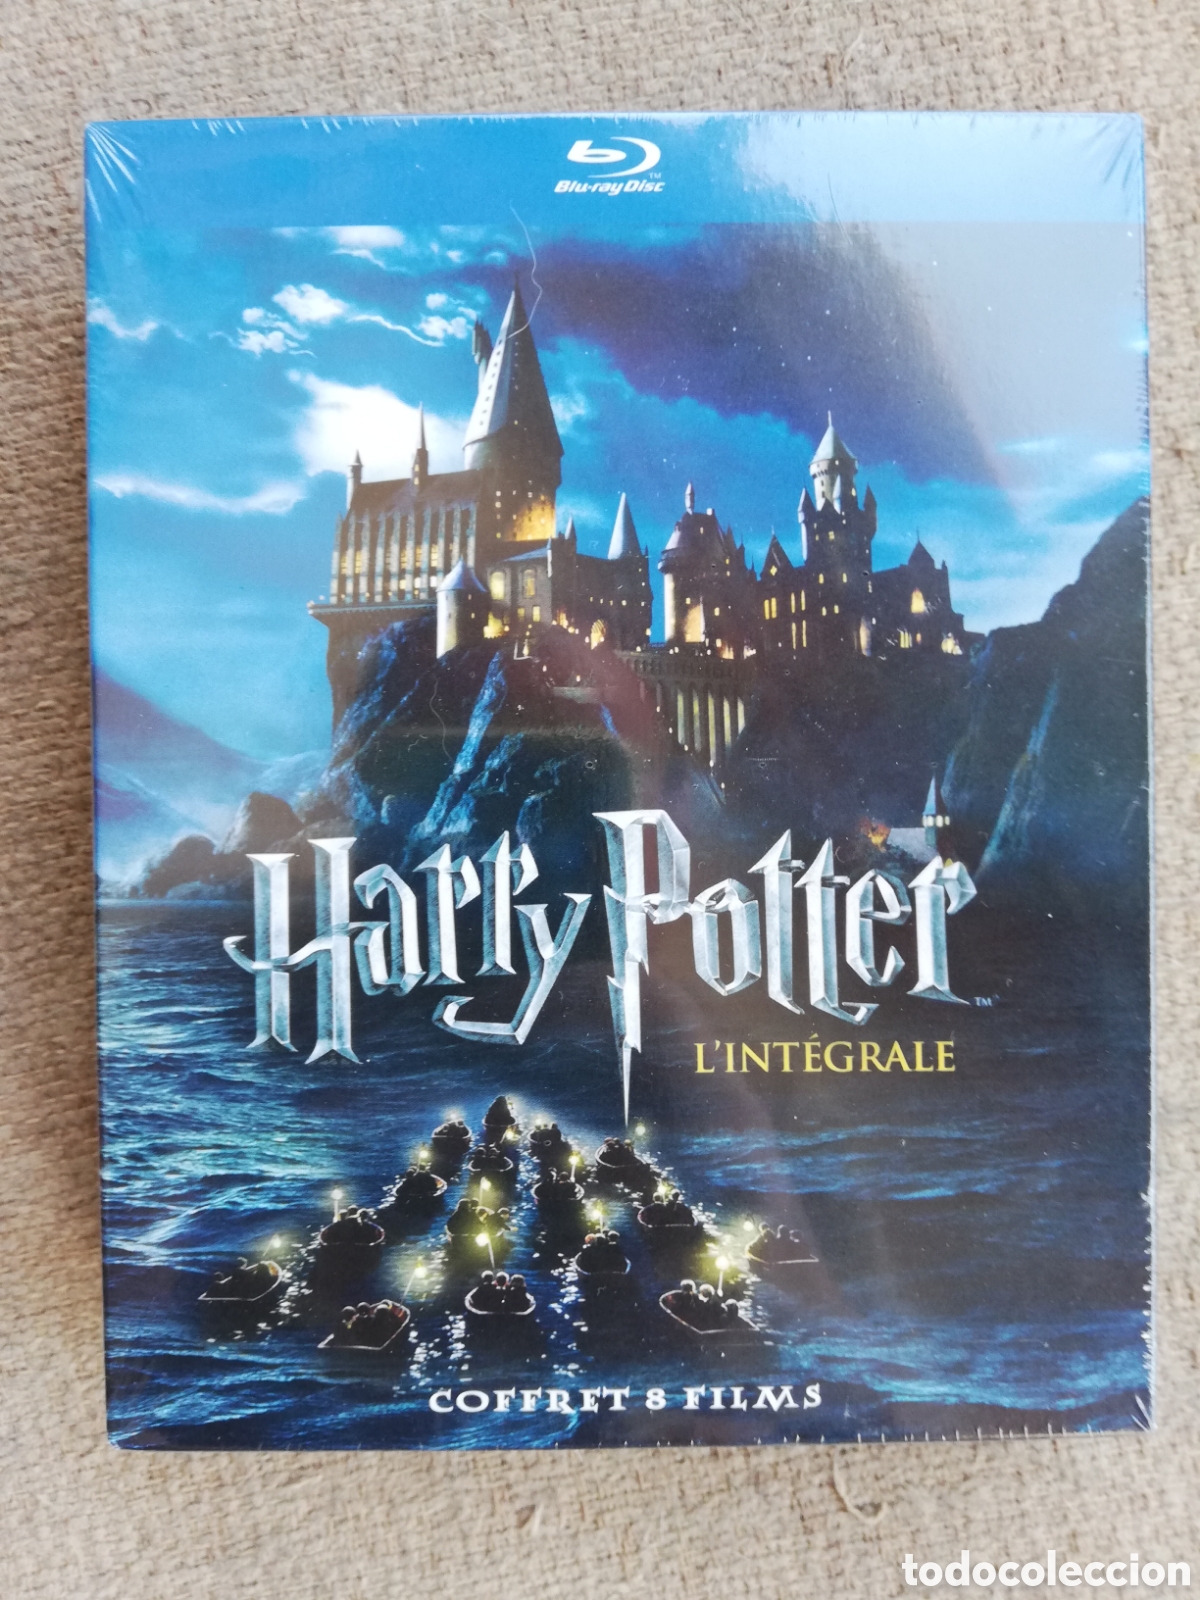 Coffret Harry Potter Intégrale des 8 films en Blu-ray